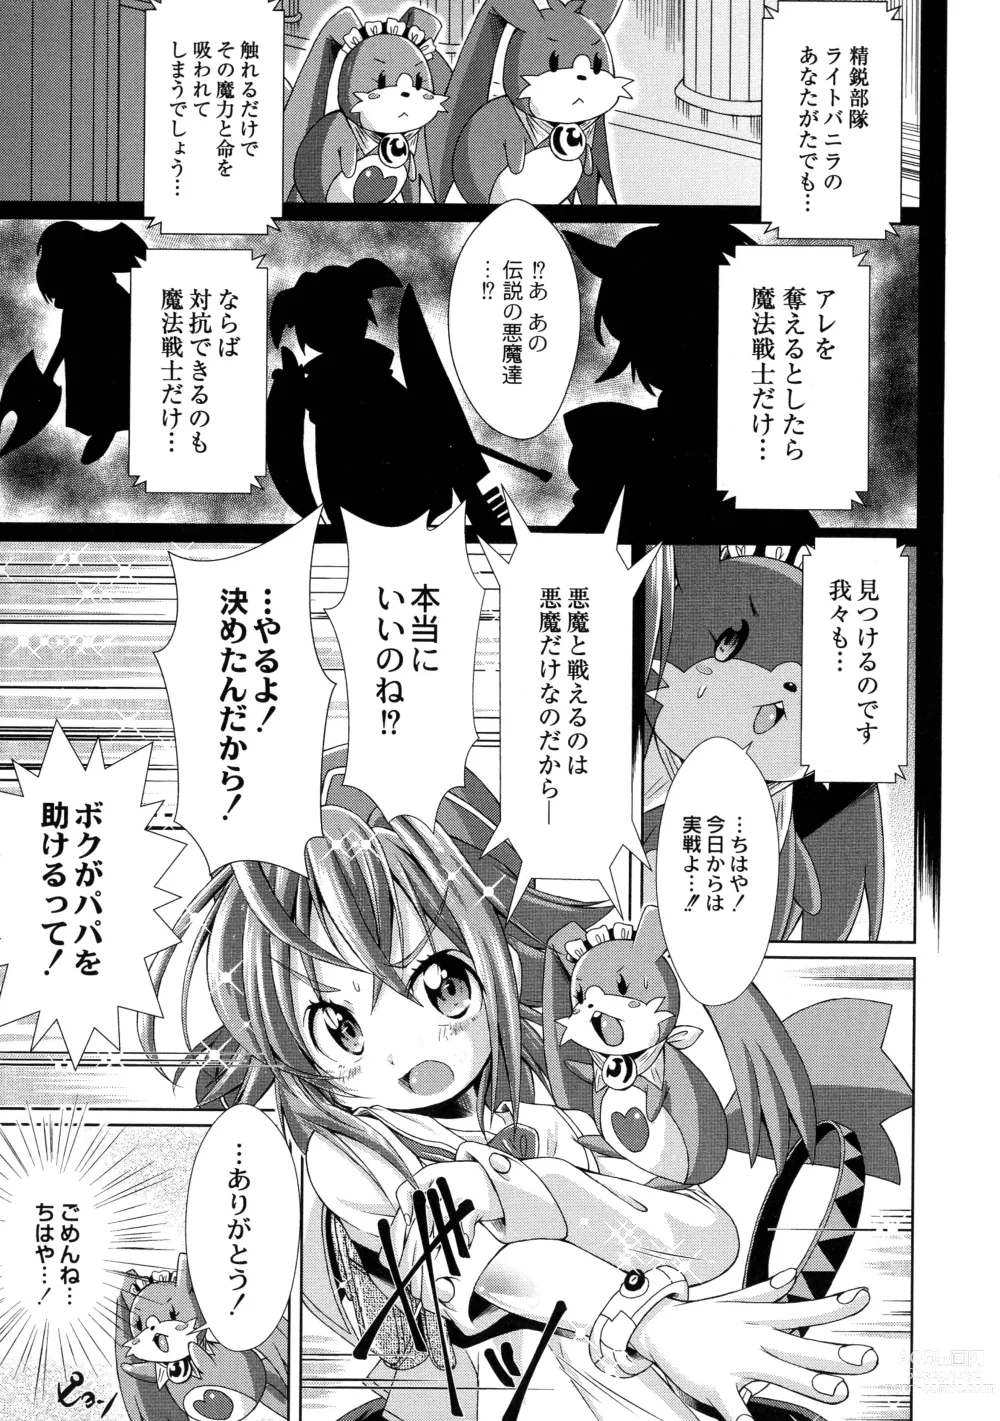 Page 9 of manga Magical Canaan Reboot